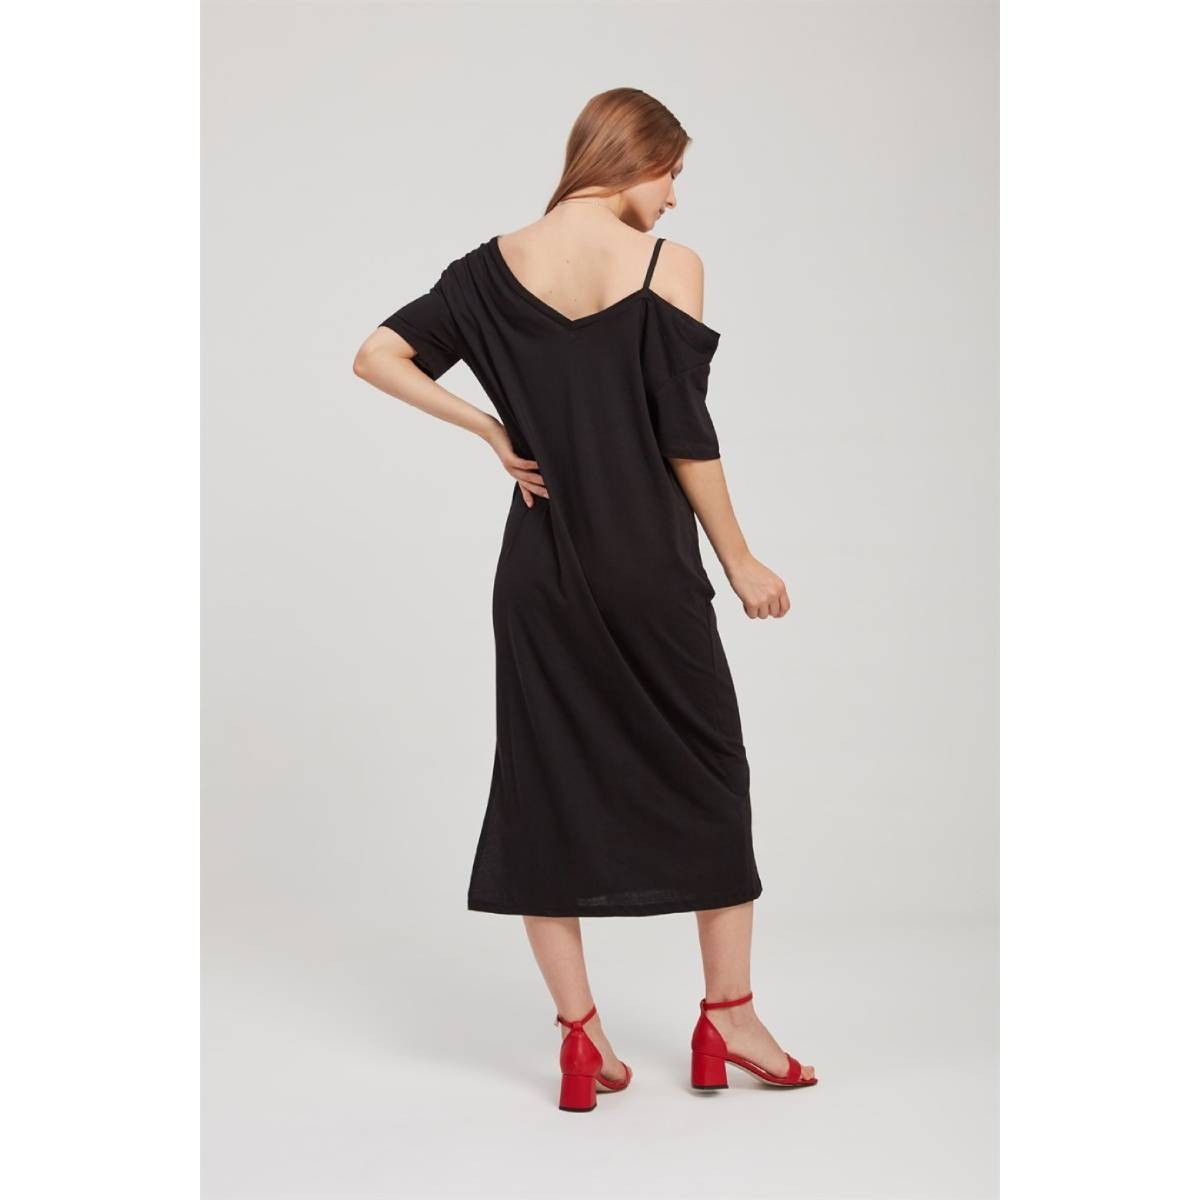 Flo Kadın  Siyah  V Yaka Dantel Detaylı Pamuklu Elbise. 4